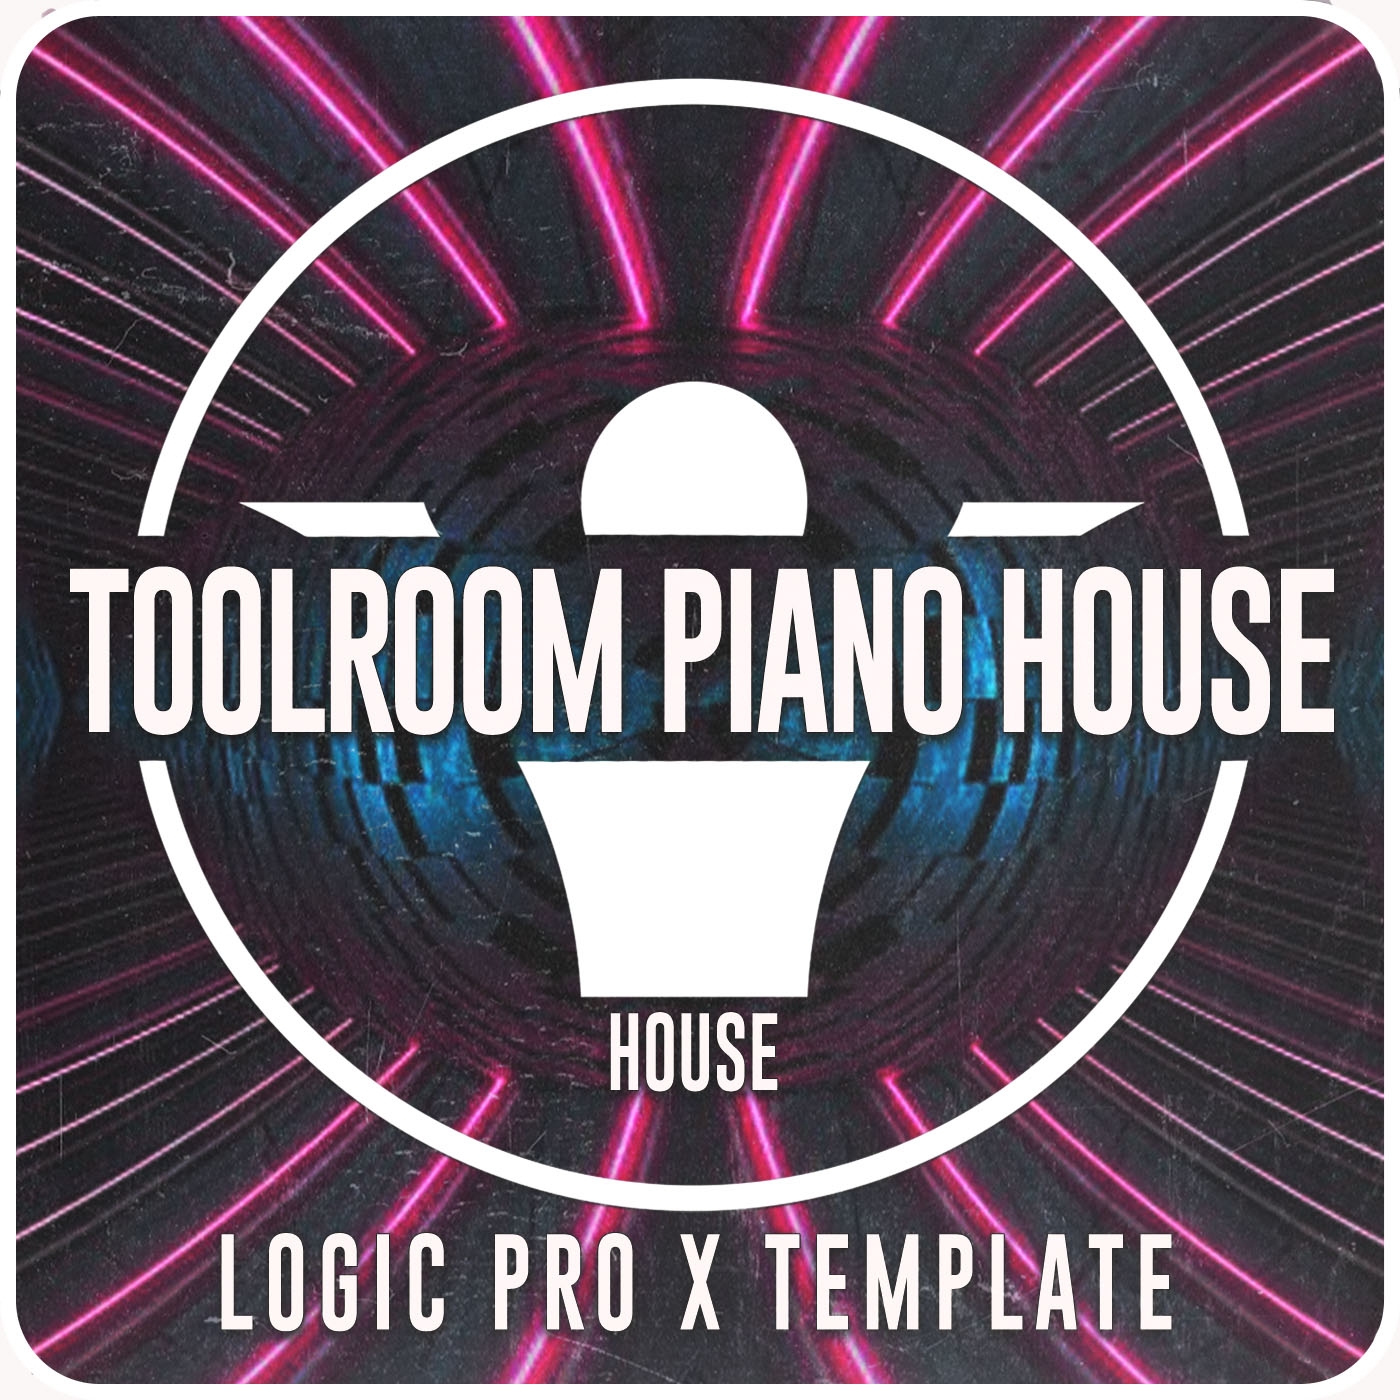 Toolroom (Classic Piano House) - Logic Pro X Template